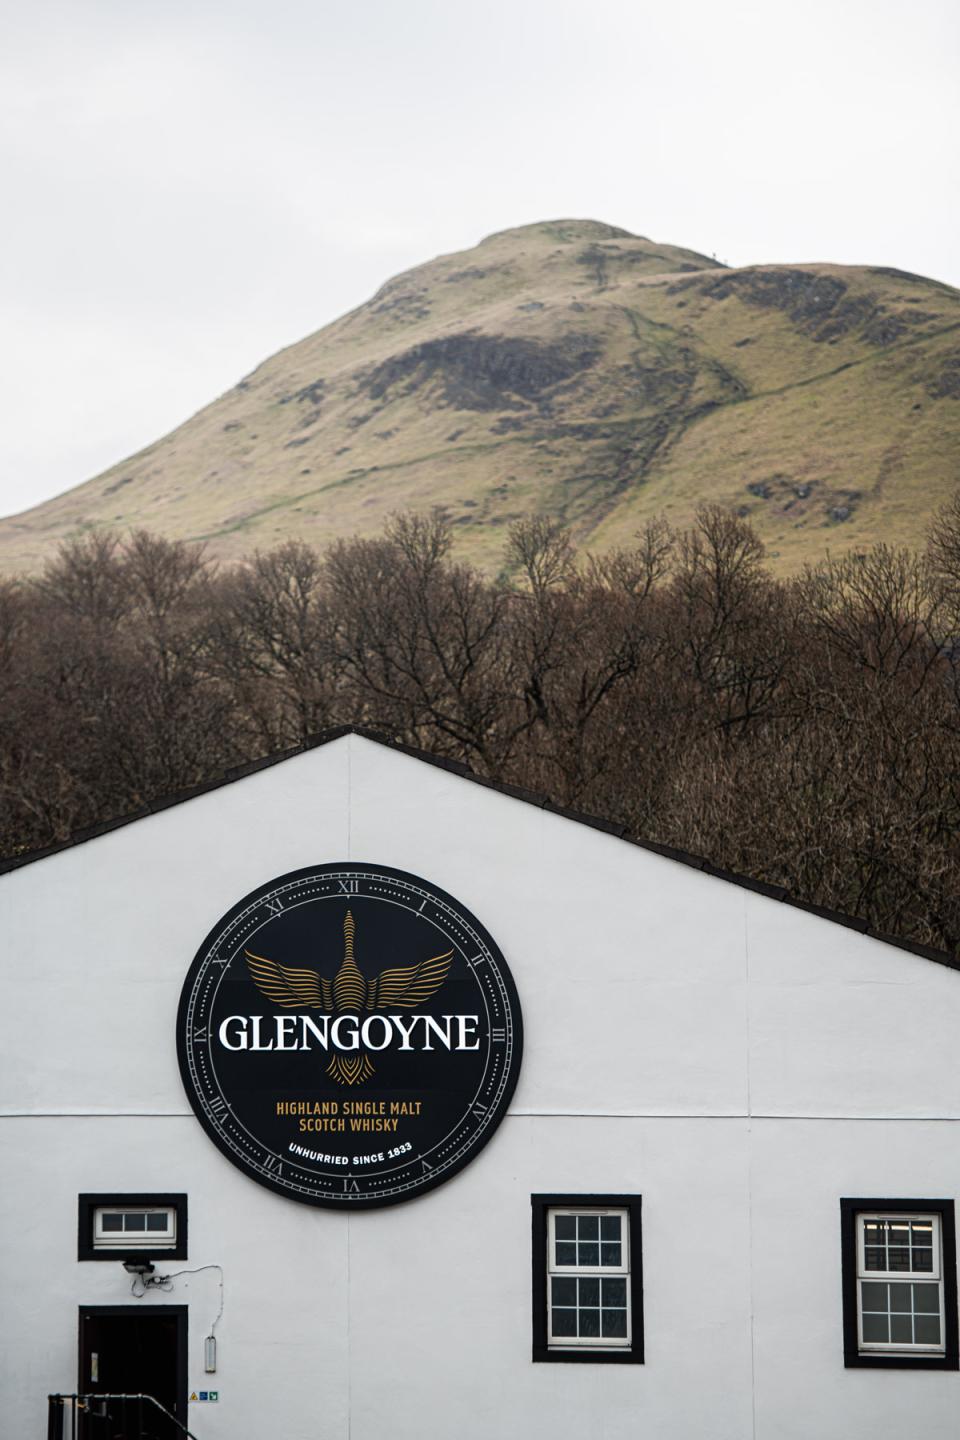 Glengoyne whisky distillery brand home backdrop